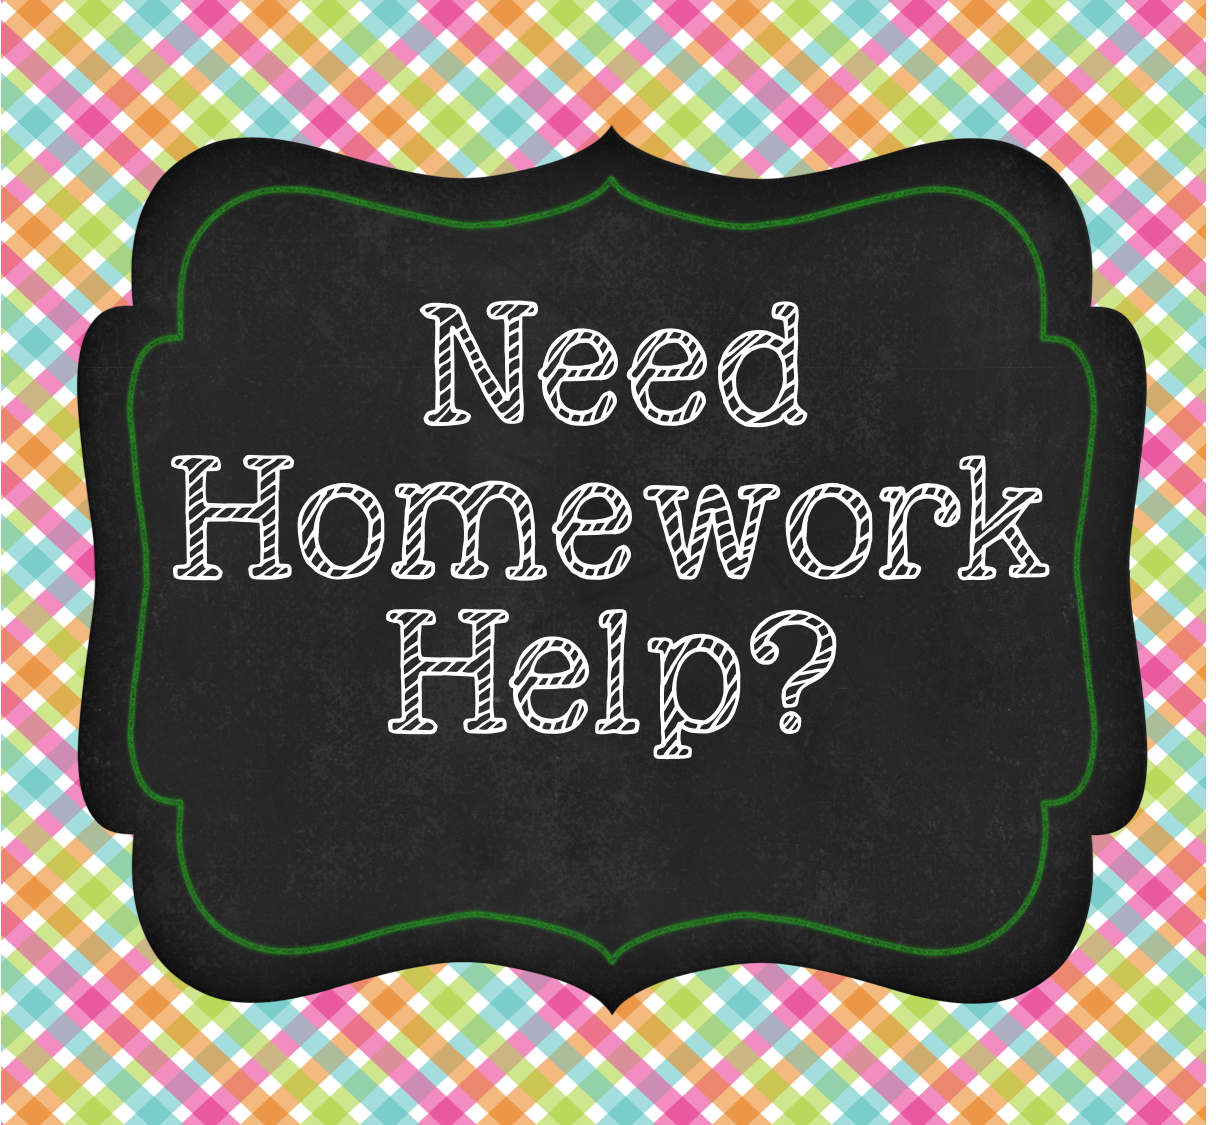 Writing homework help